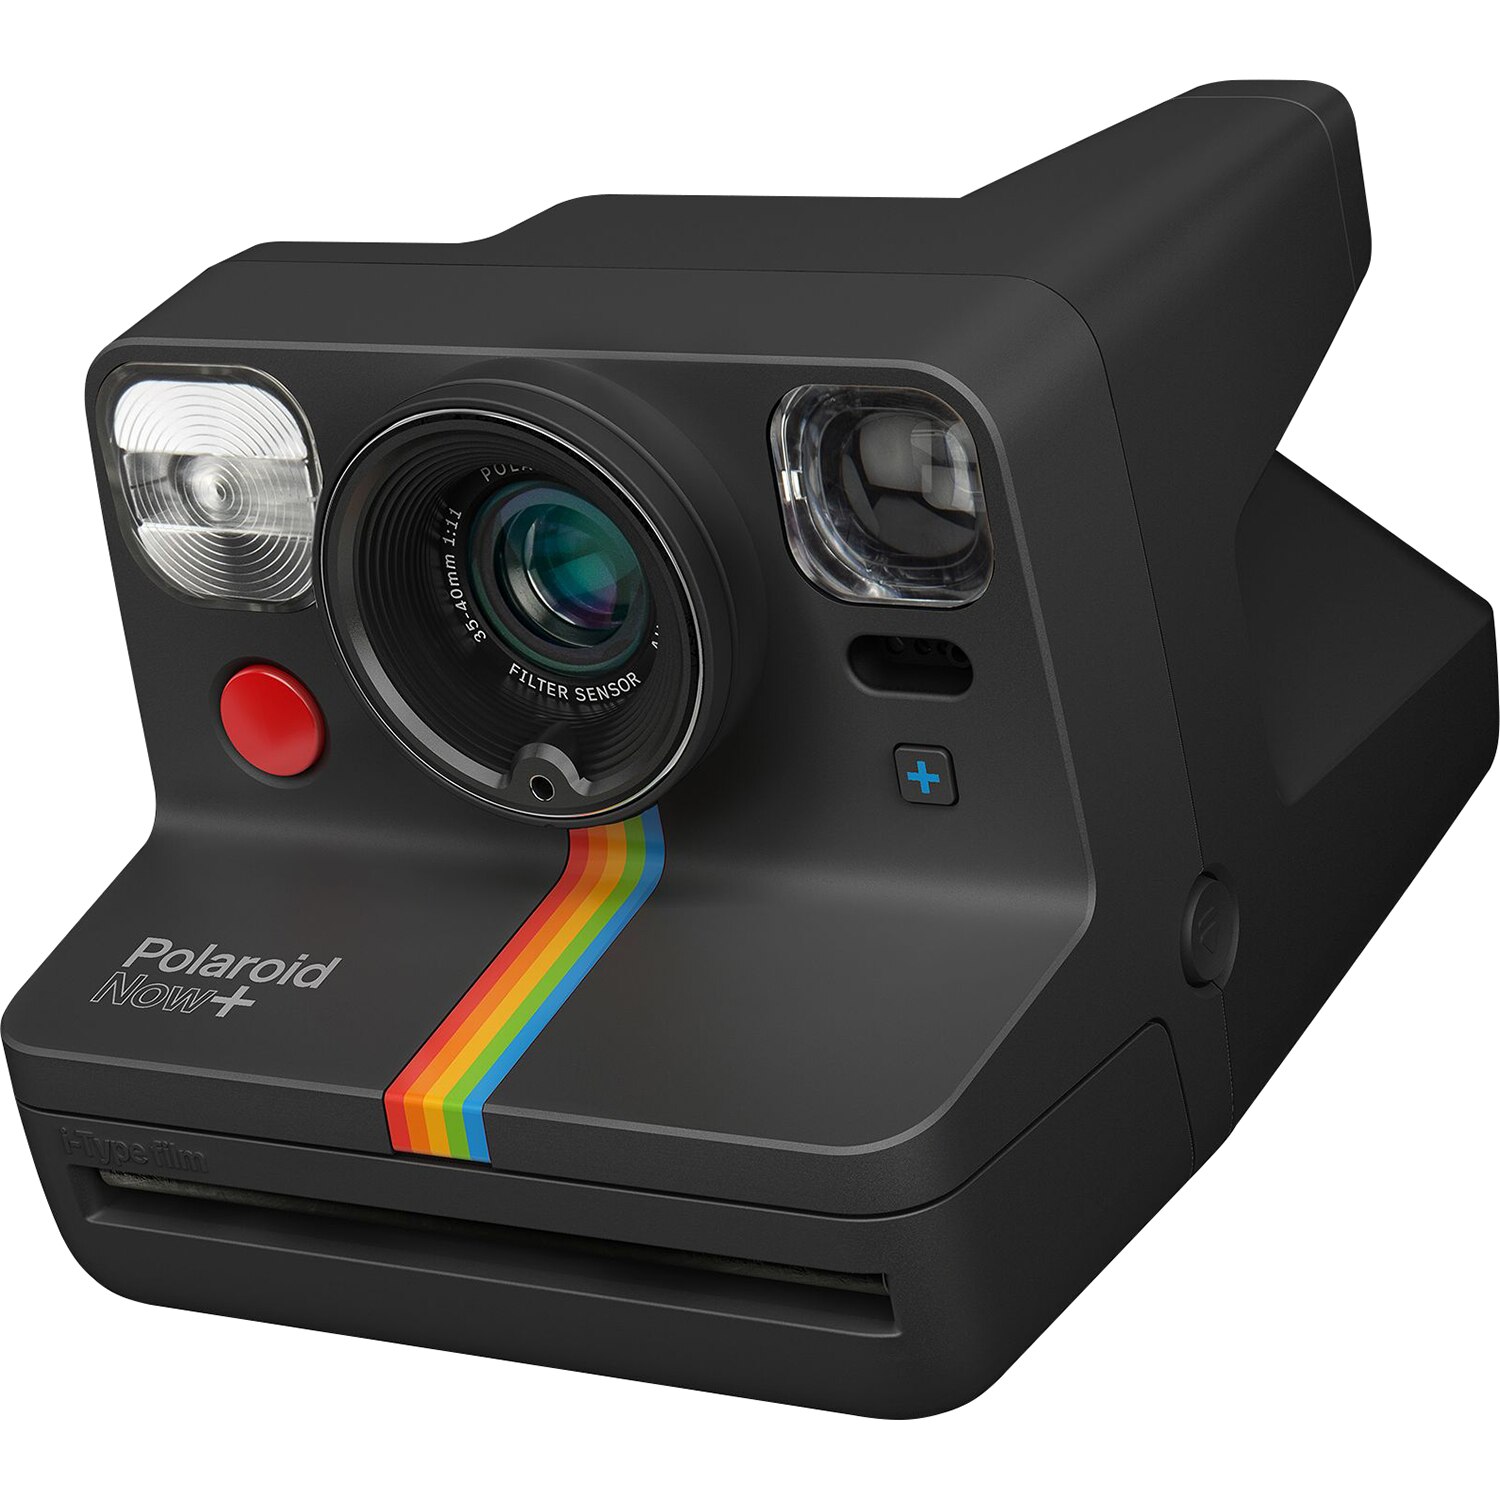 Polaroid Now+ Instant Camera, Black